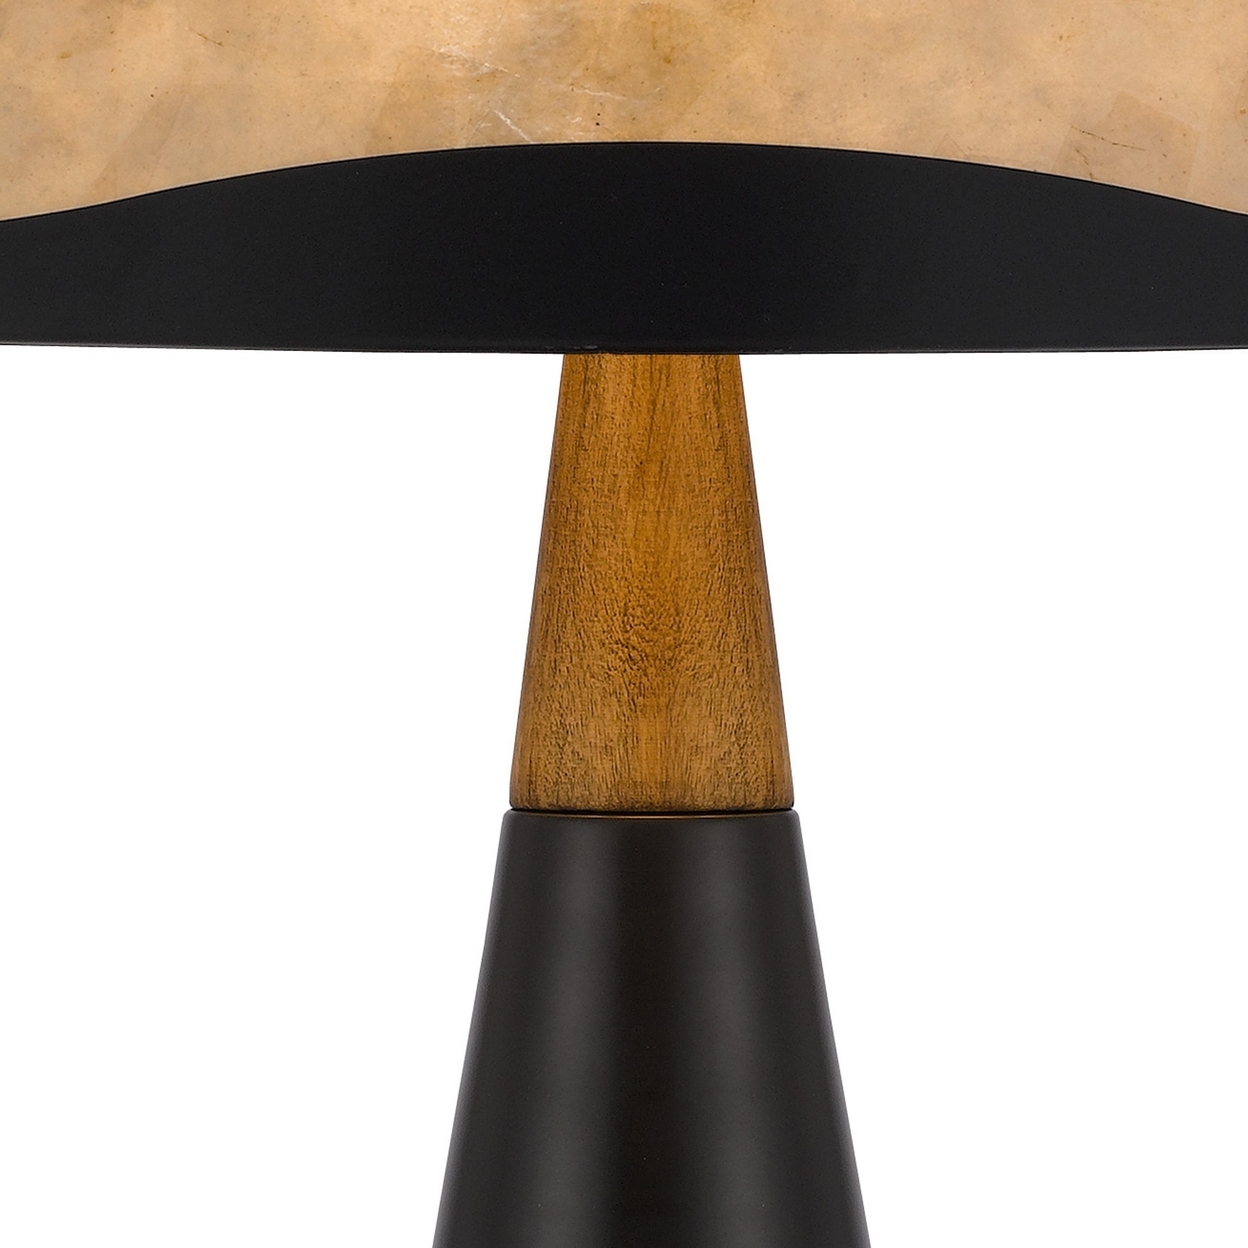 30 Inch 3 Way Table Lamp, Beige Mica Shade, Rubberwood And Black Metal Body- Saltoro Sherpi